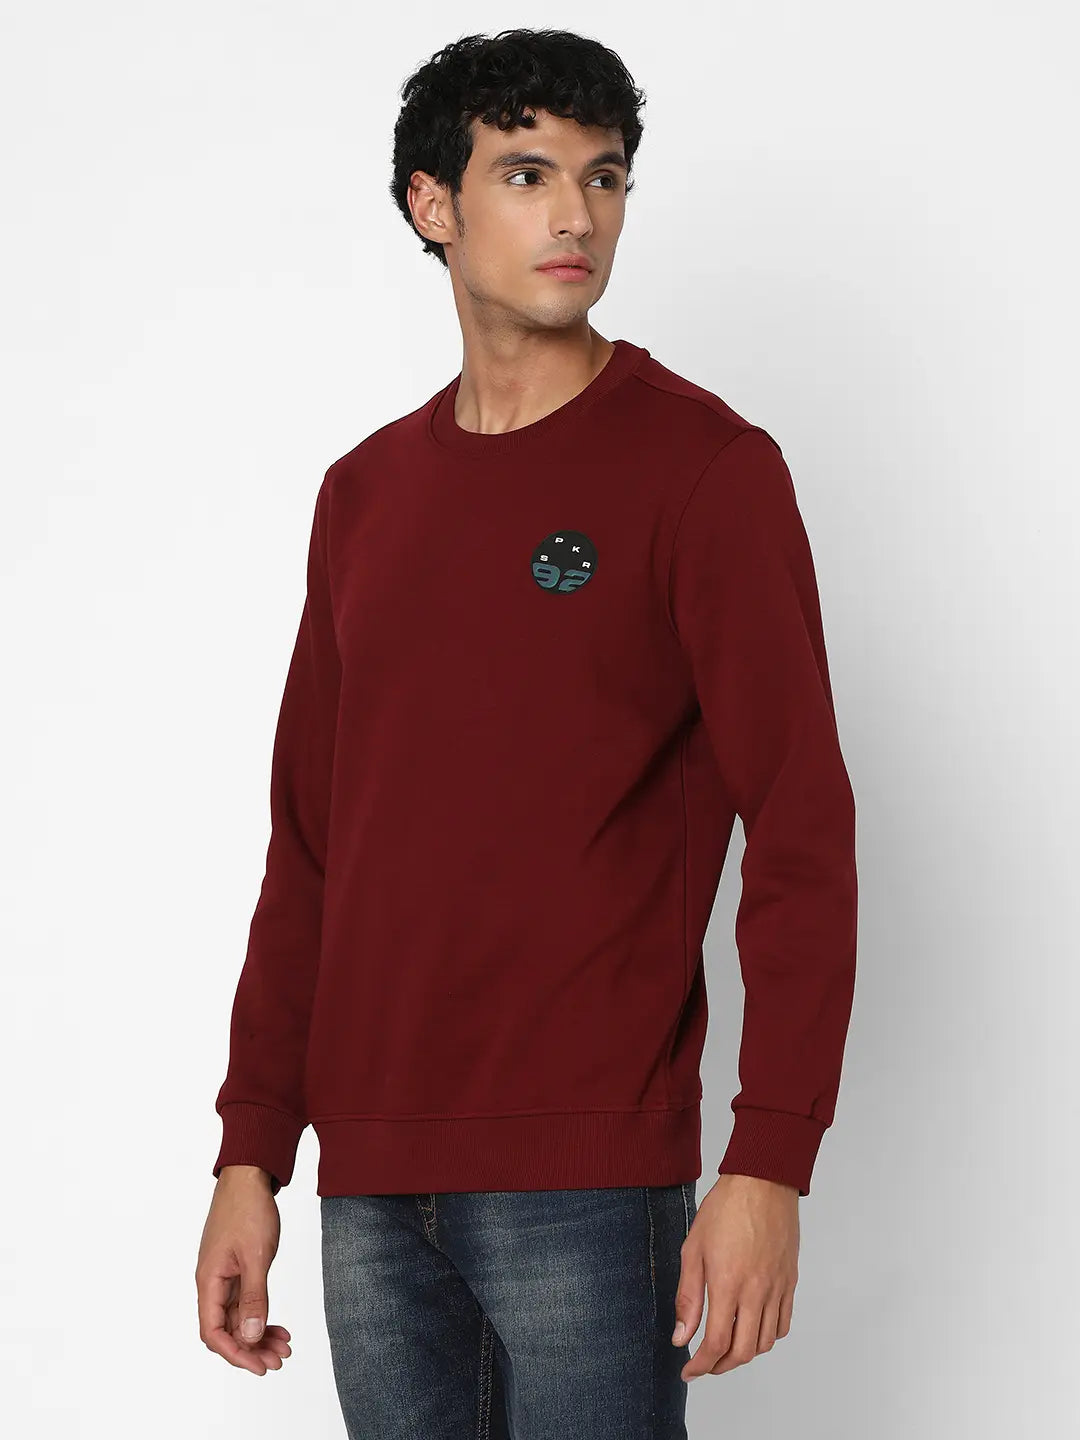 Spykar Men Wine Red Blended Slim Fit Full Sleeve Round Neck Plain Casual Sweatshirt